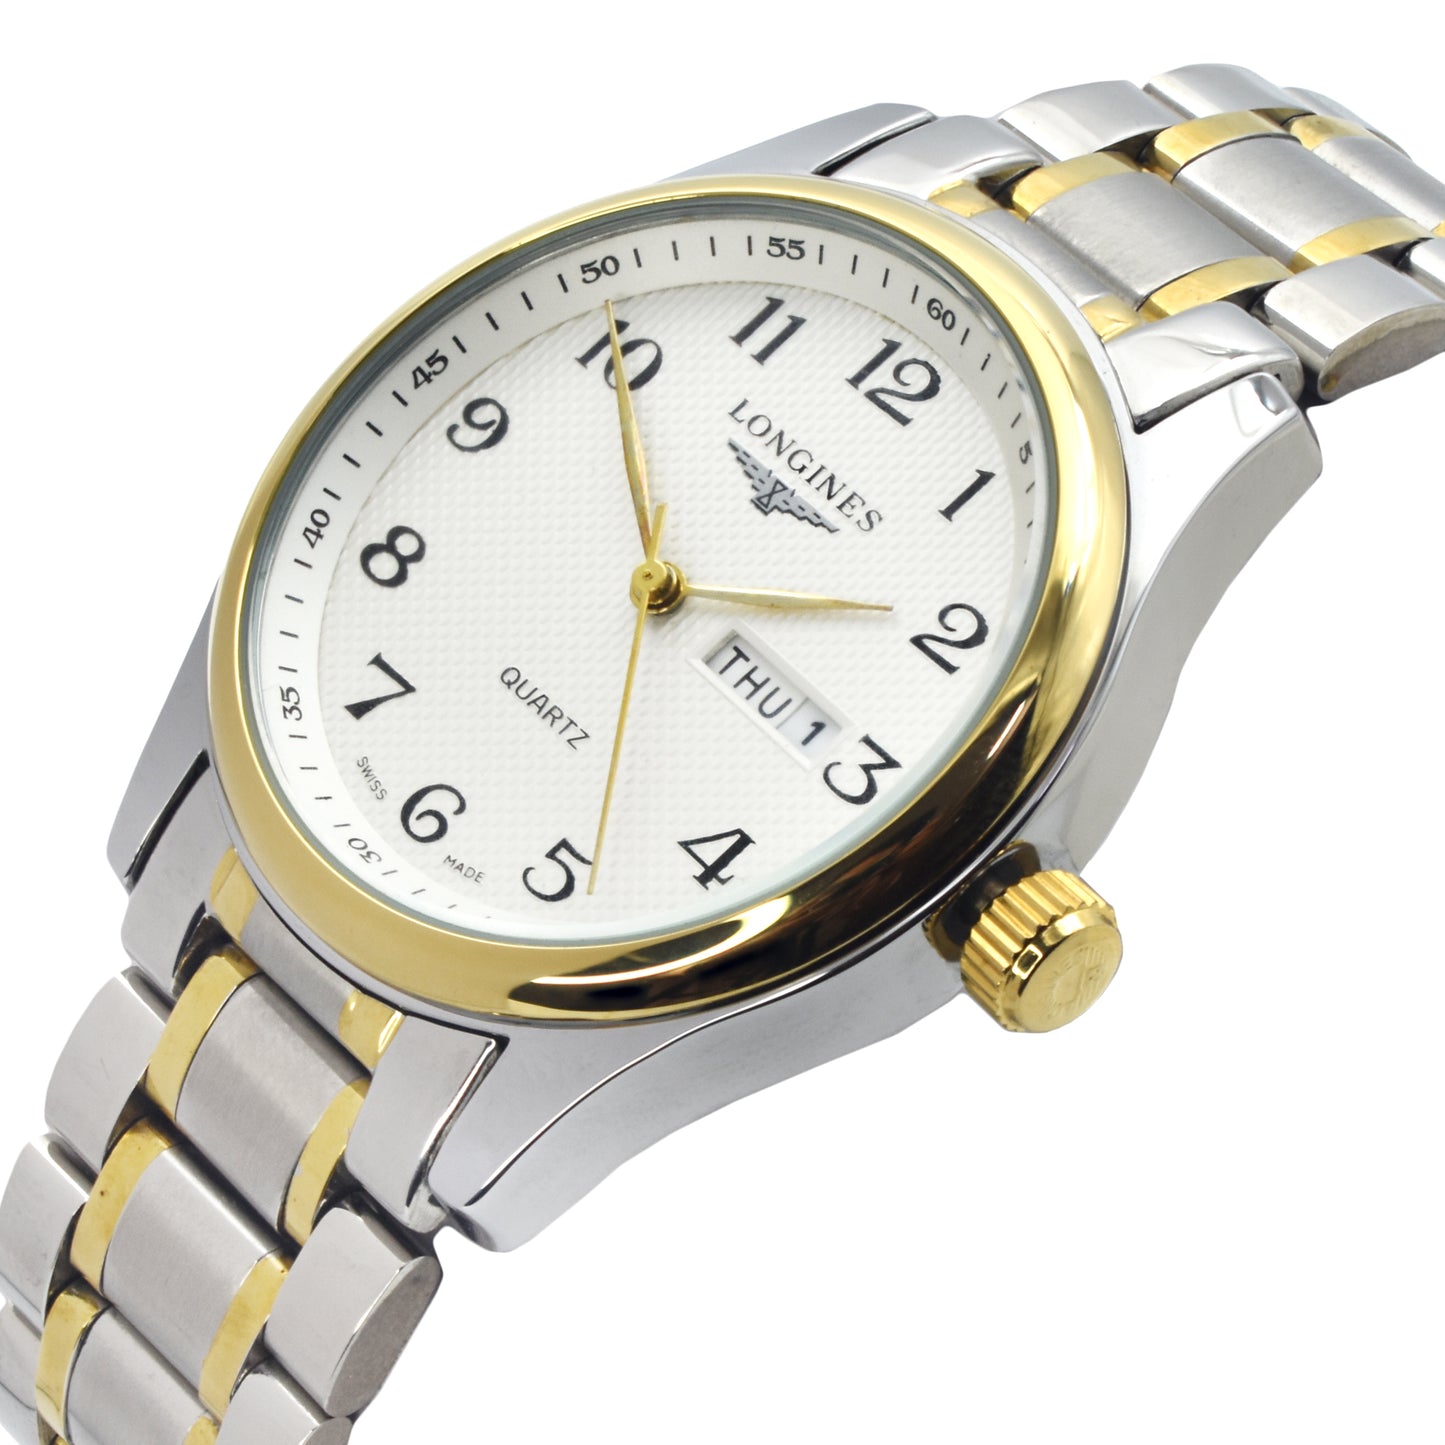 Business Class Premium Quality Quartz Watch | LNGS Watch 1002